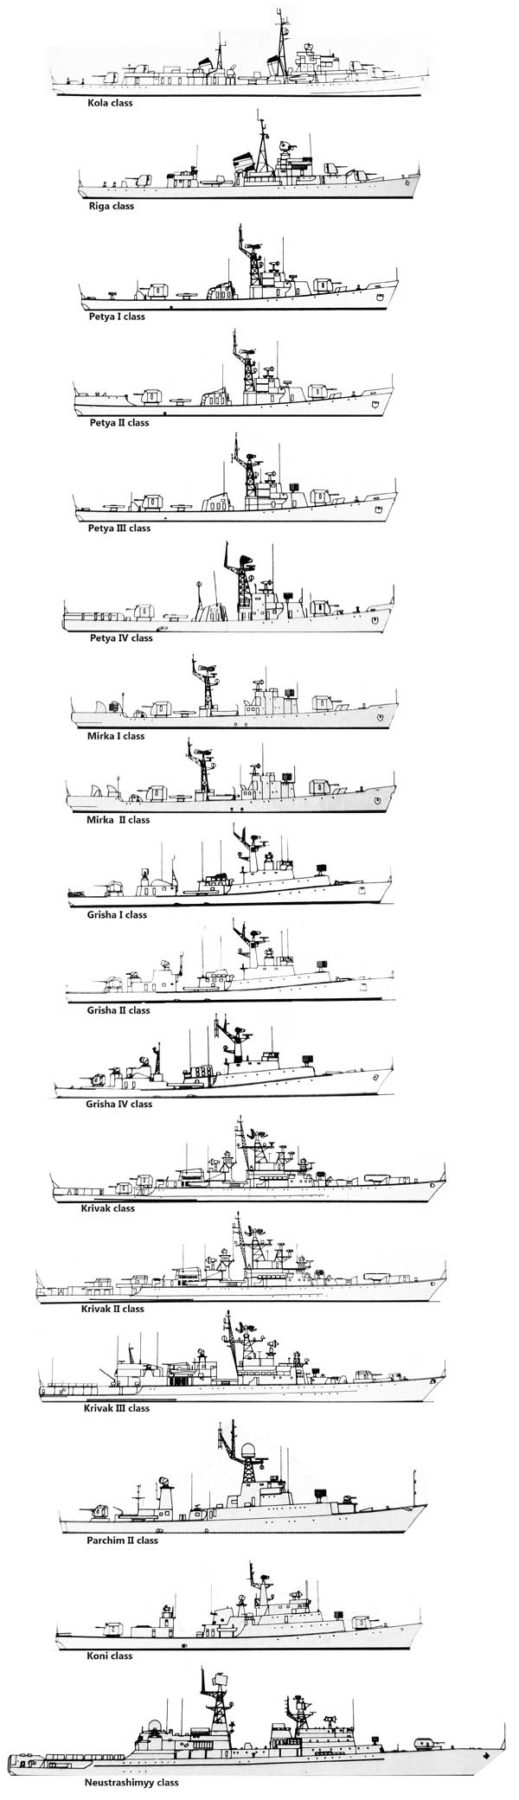 overview of soviet frigates from the Kola to the Neustrashimyy class